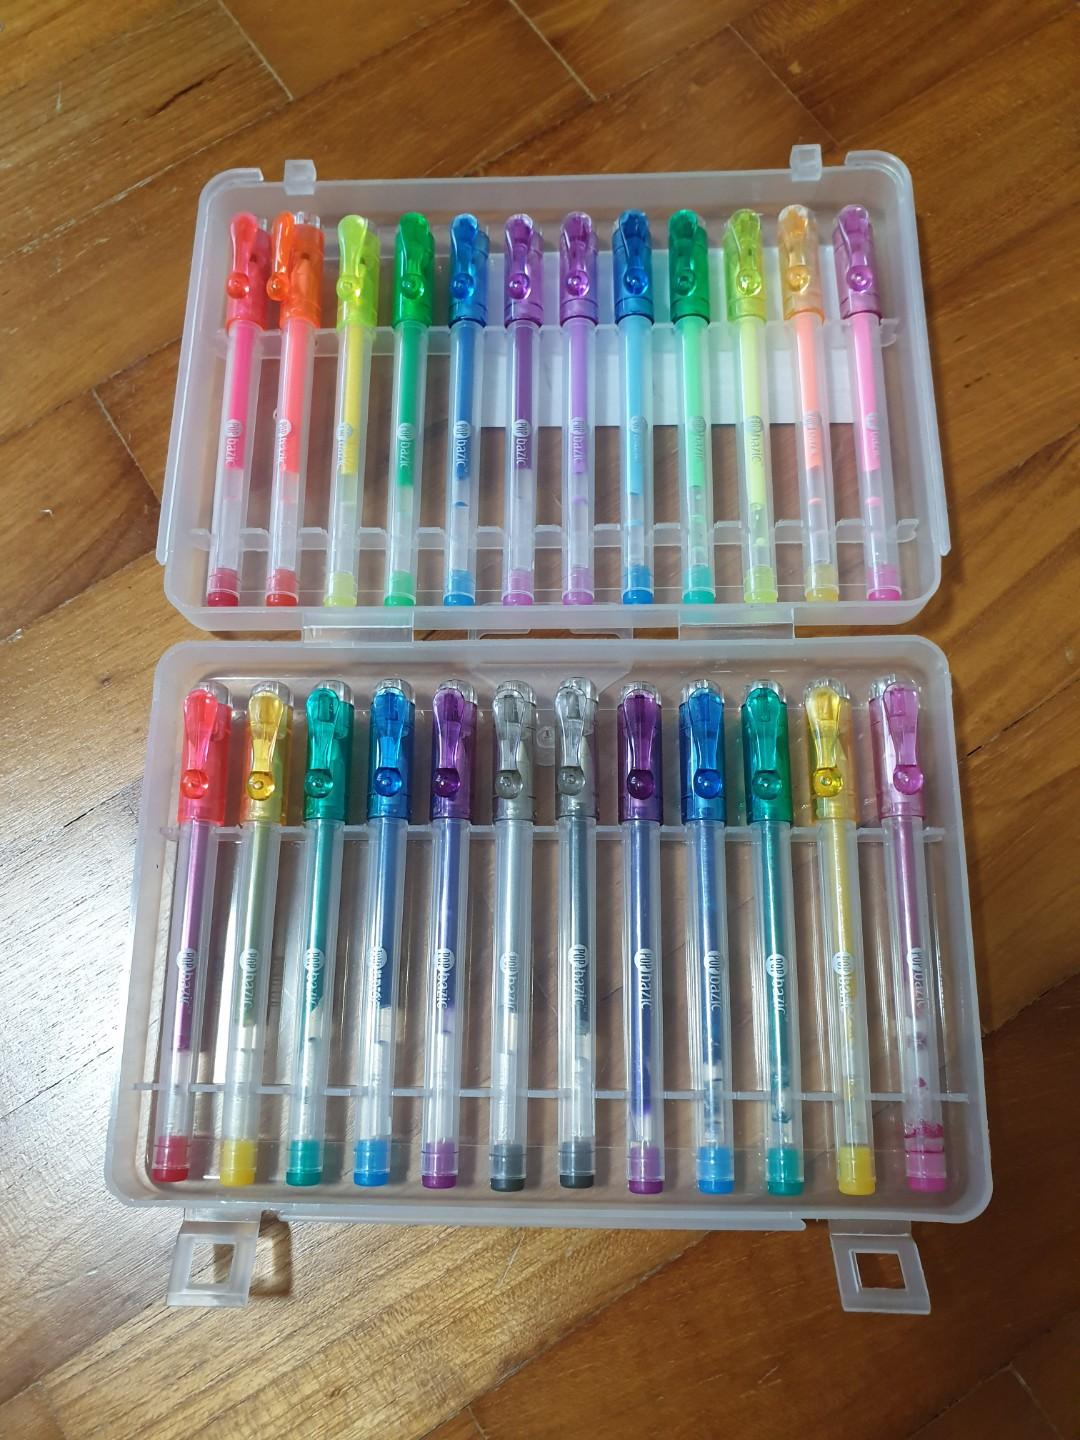  Yoobi Mini Gel Pens & Carrying Case, Neon, Metallic, Glitter  Shades, Multicolor Ink, 1.0mm Medium Tip